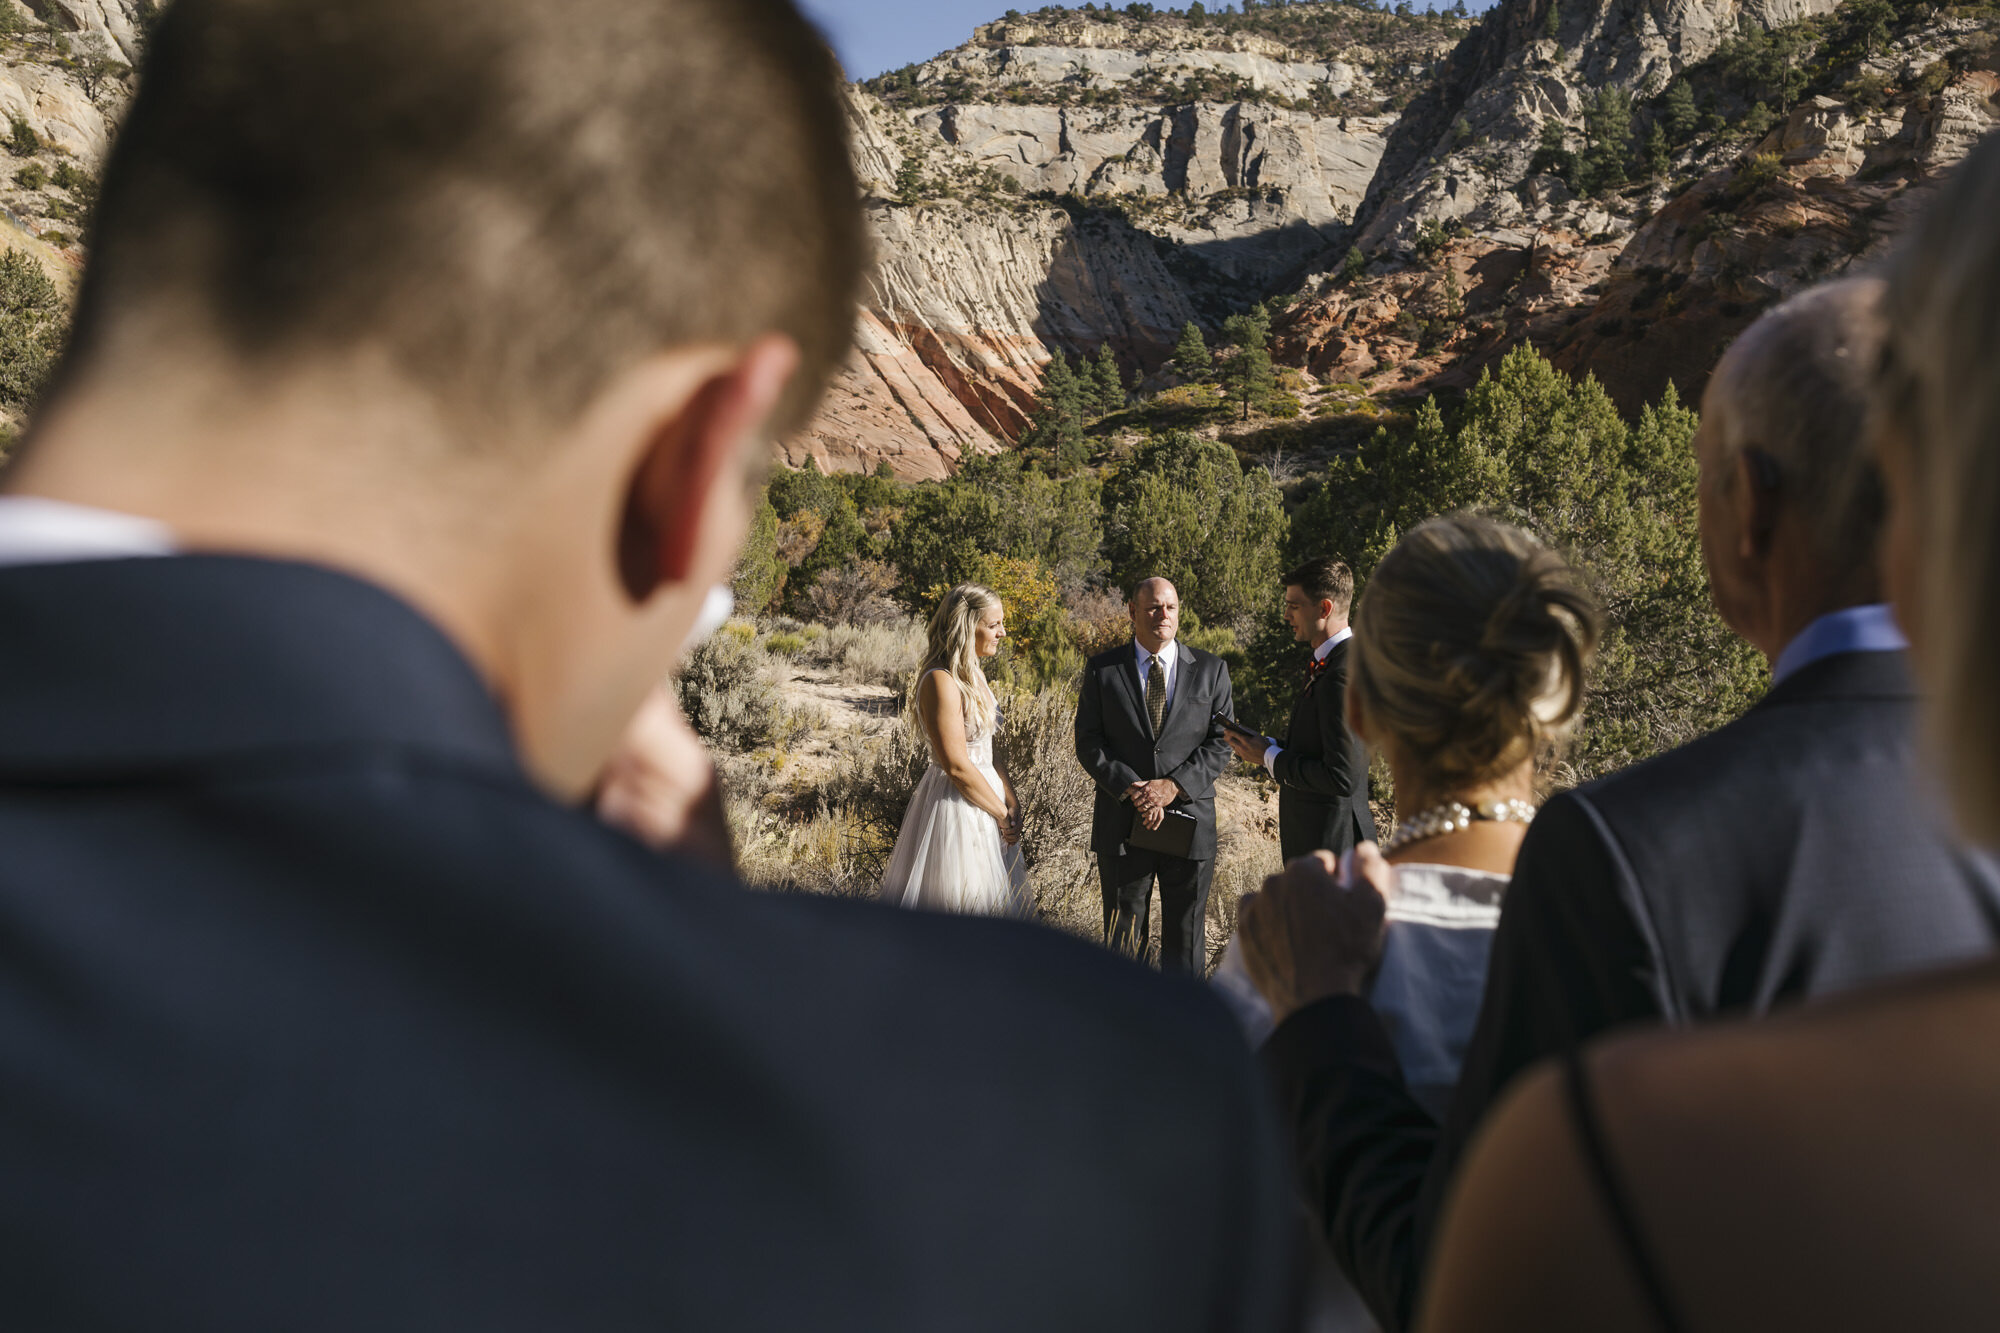 Immediate family stand together witnessing a Utah desert wedding